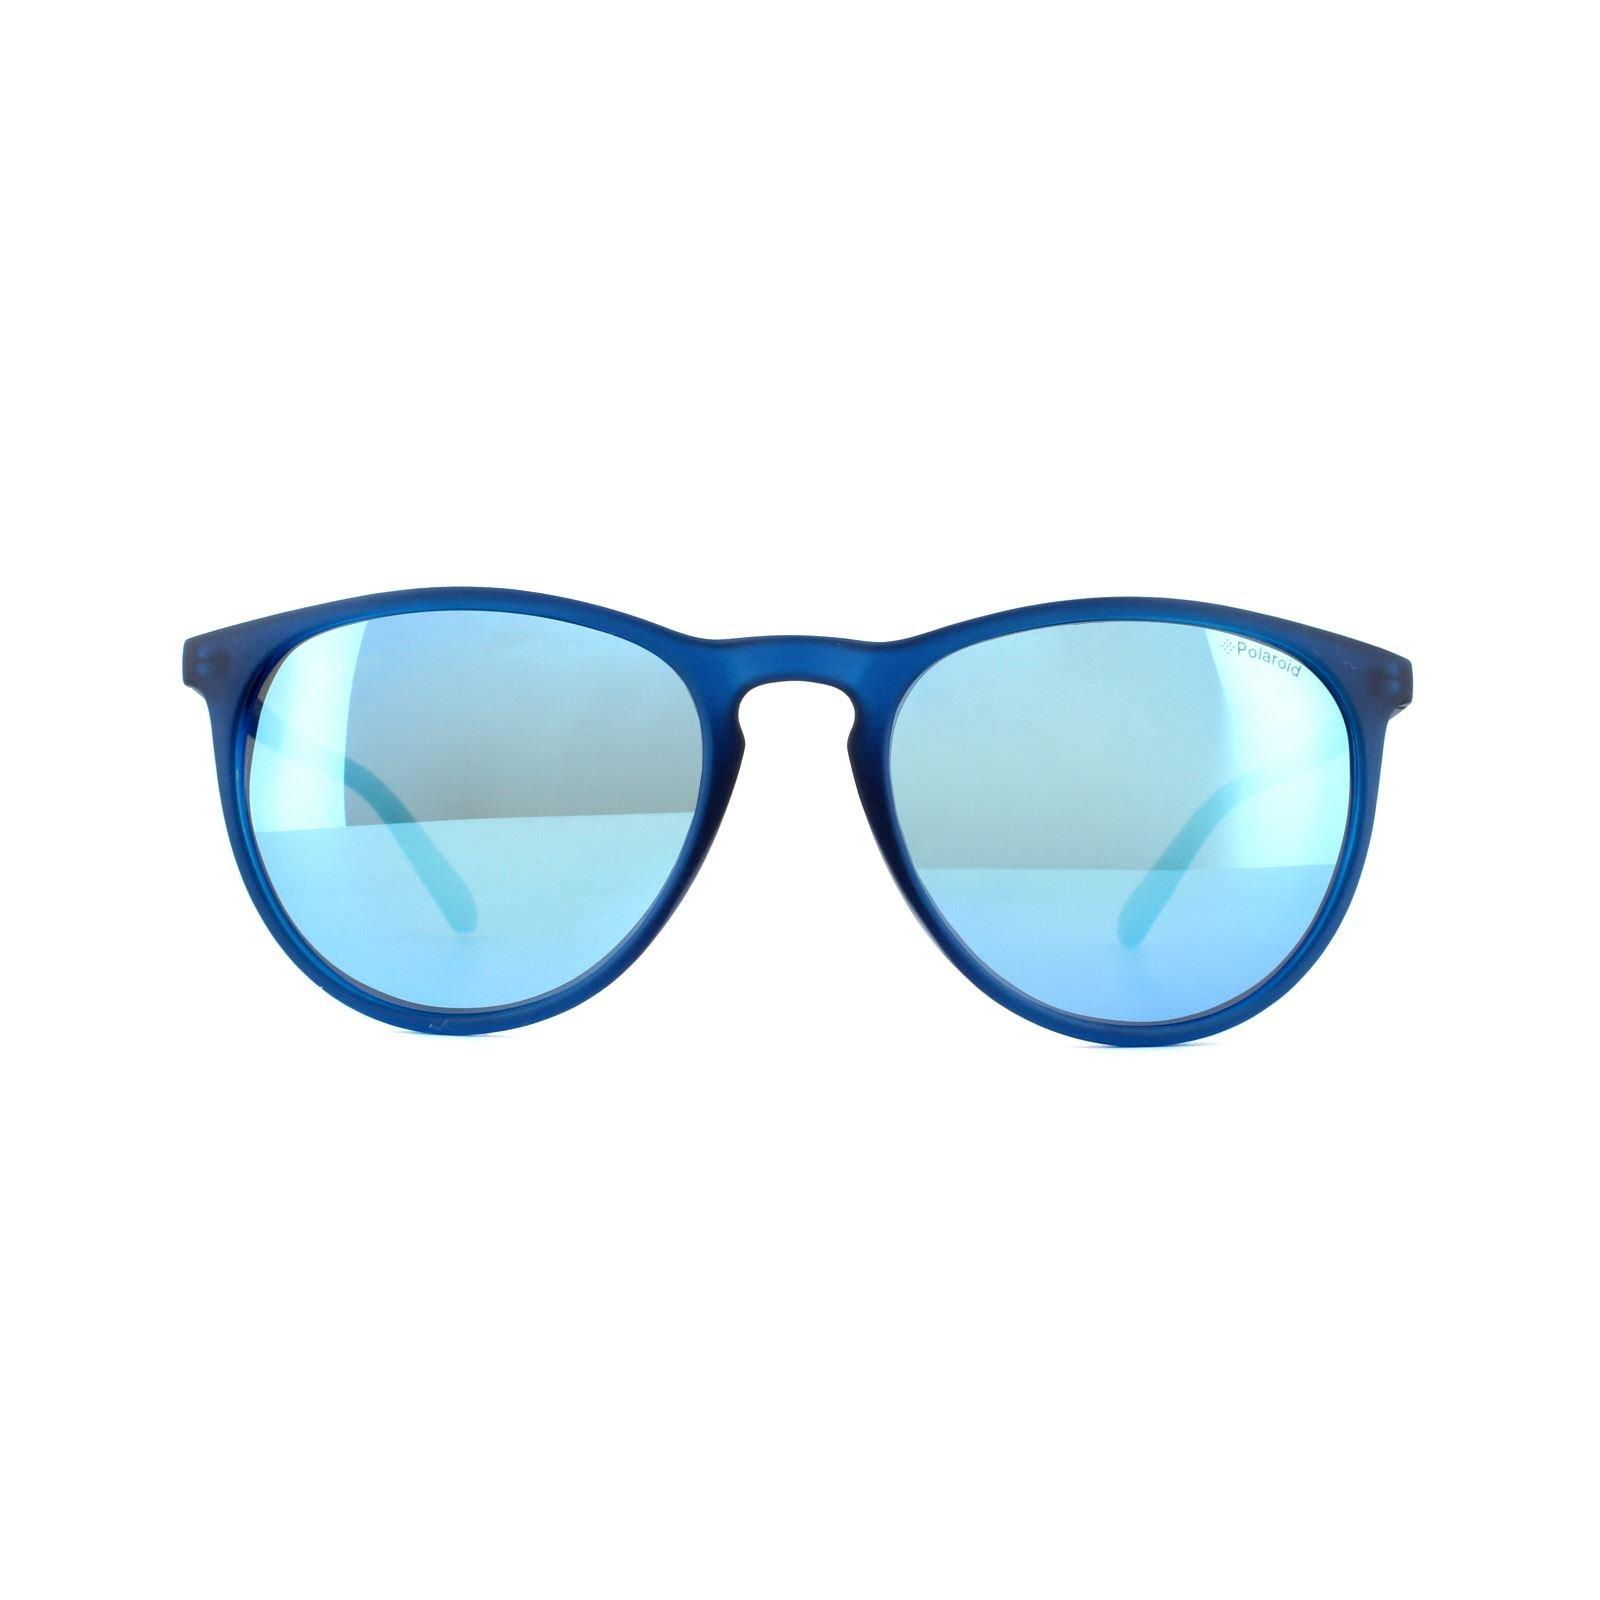 Sunglasses | Round Blue Blue Mirror Polarized Sunglasses | Polaroid